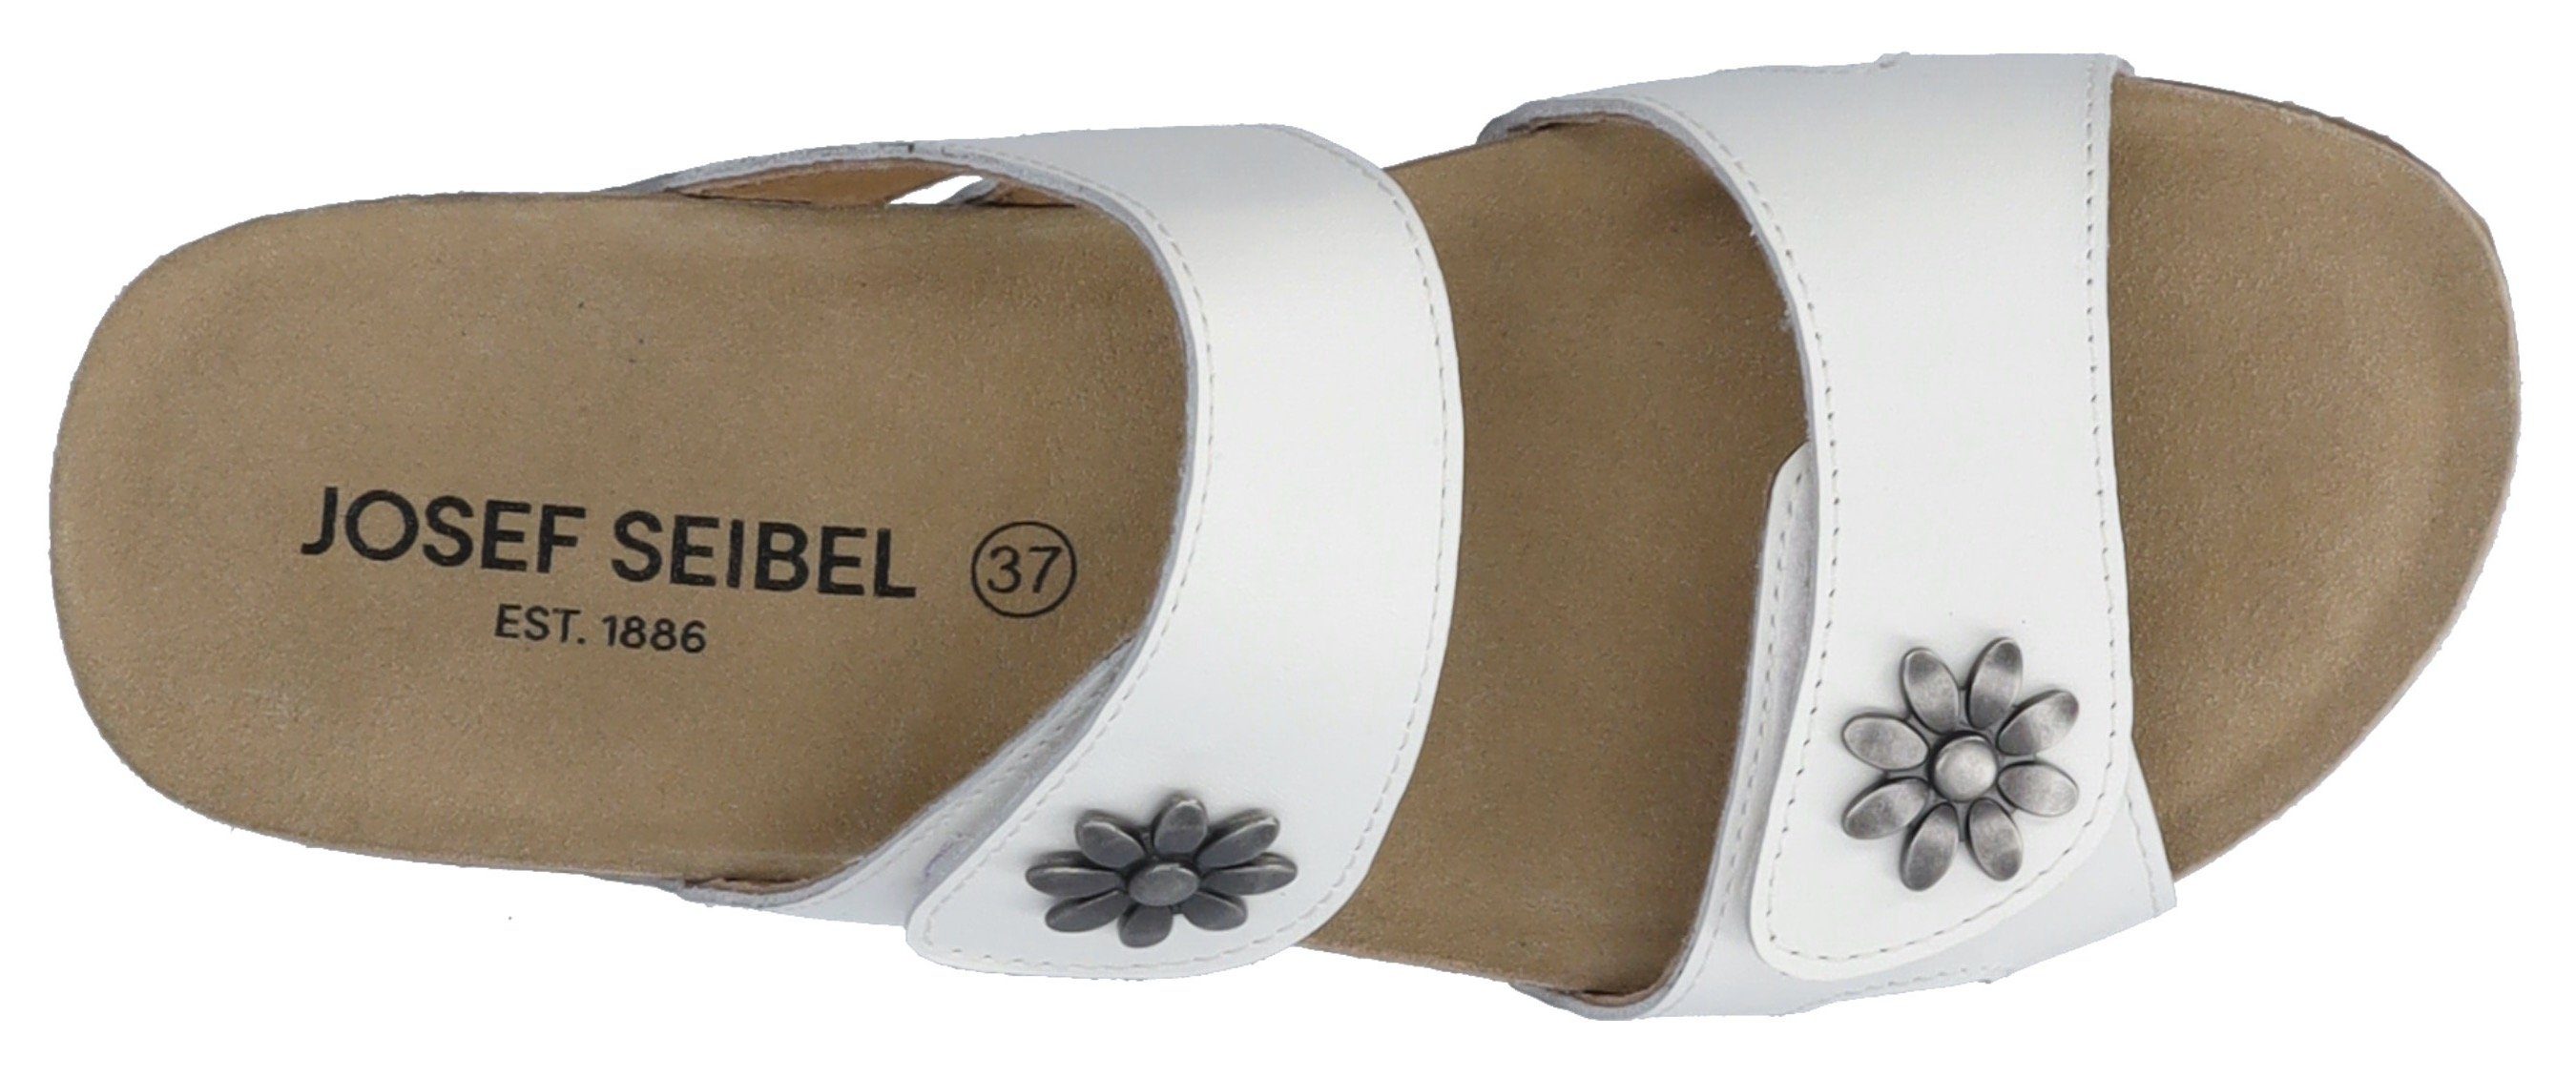 Josef Seibel TONGA 04 schönen Pantolette Schmuckelementen mit weiß